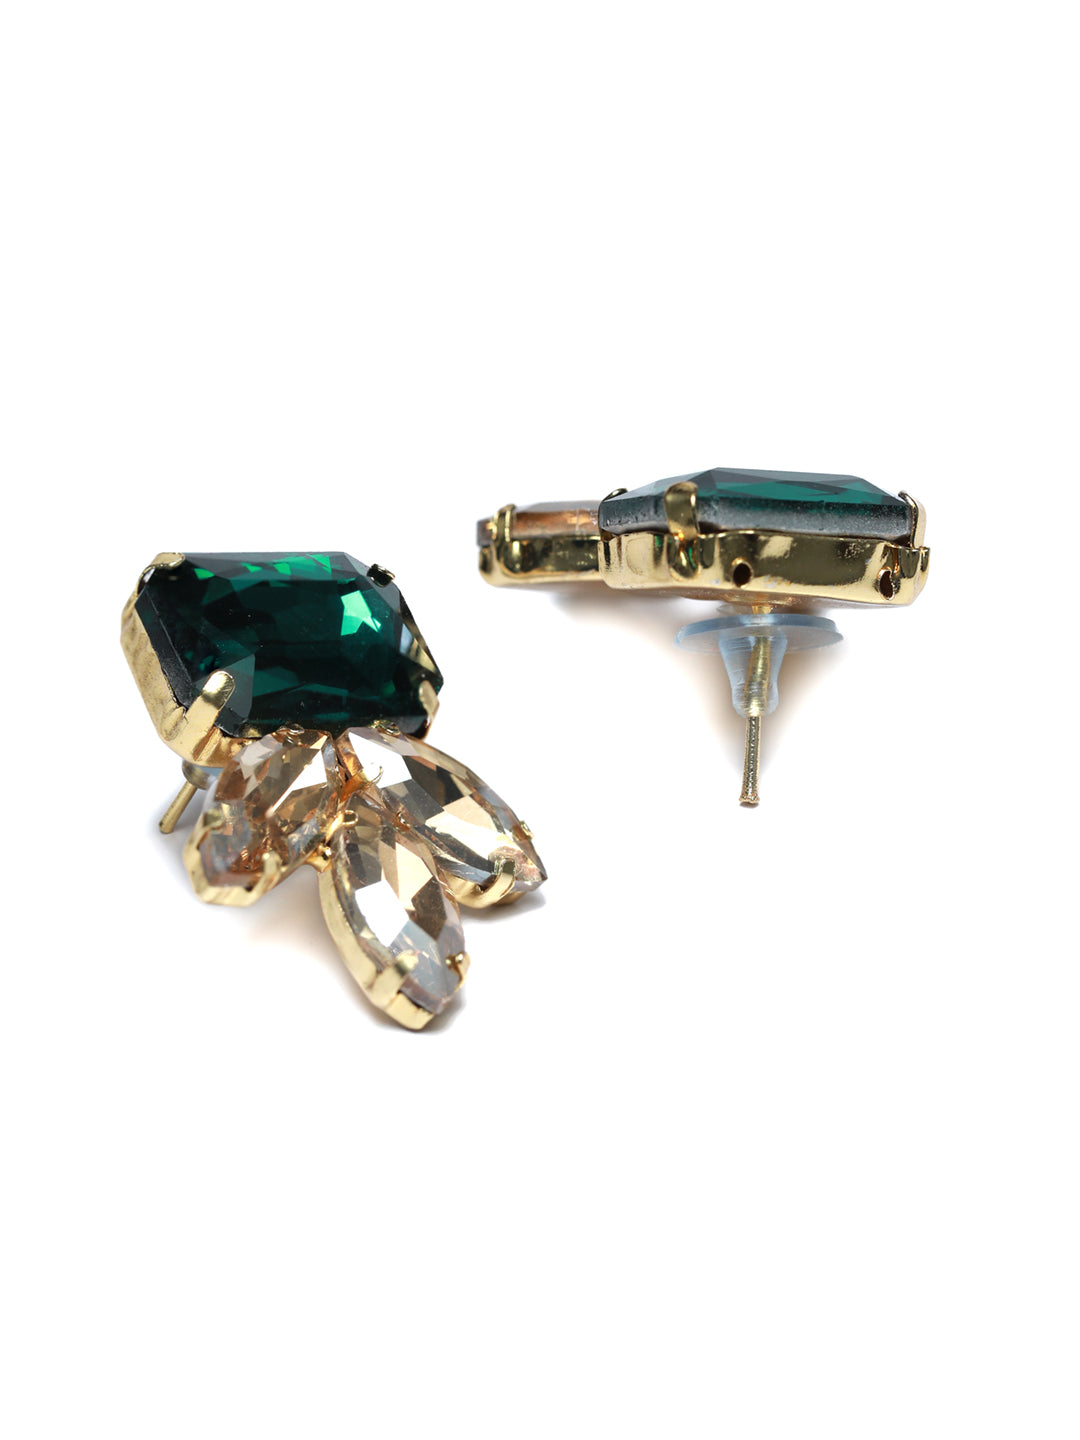 Gold & Green Rhinestone Floral Earrings